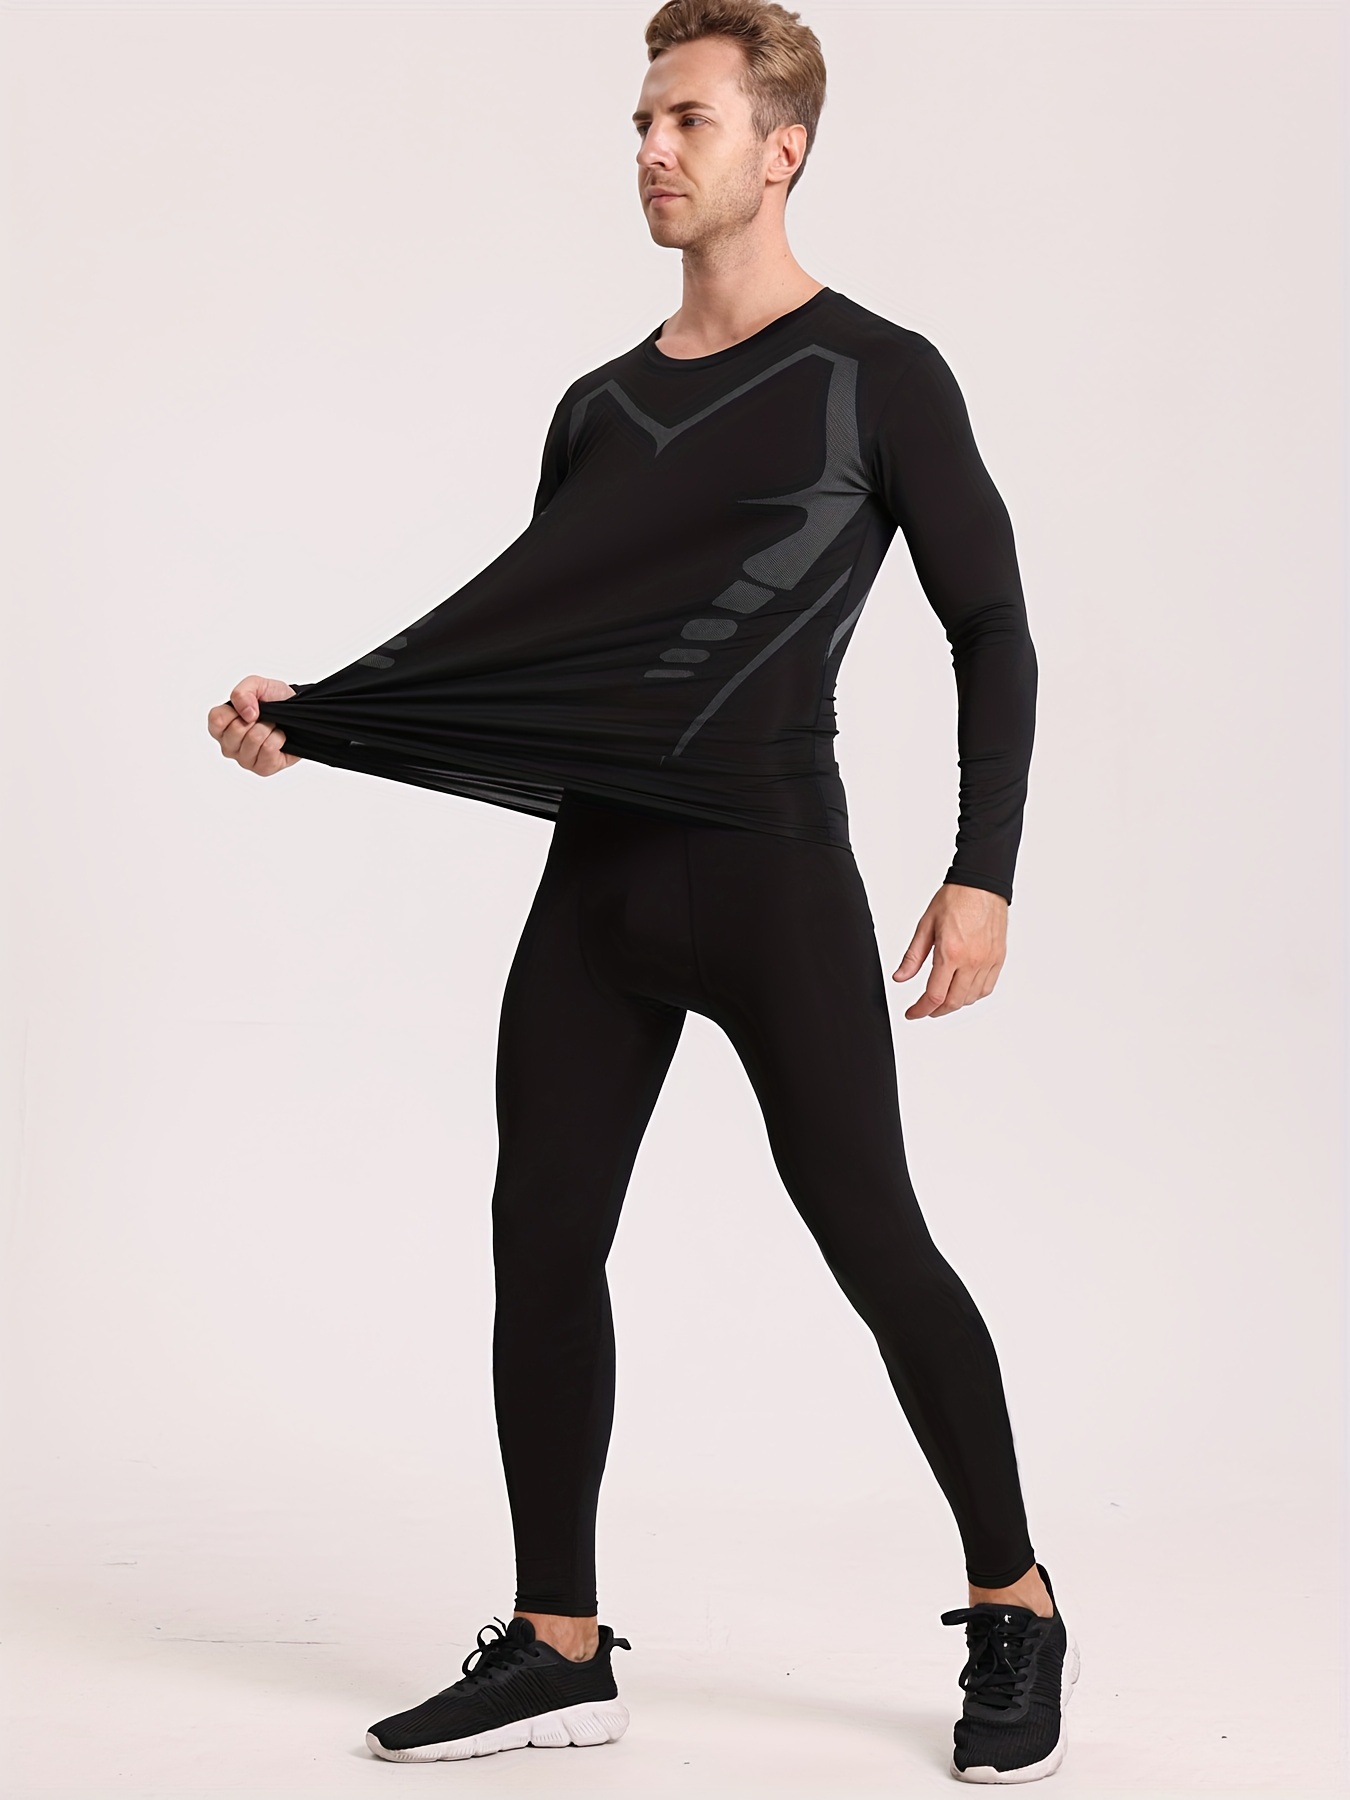 Men's Sport Thermal Fleece Compression Base Layer Leggings/Tights